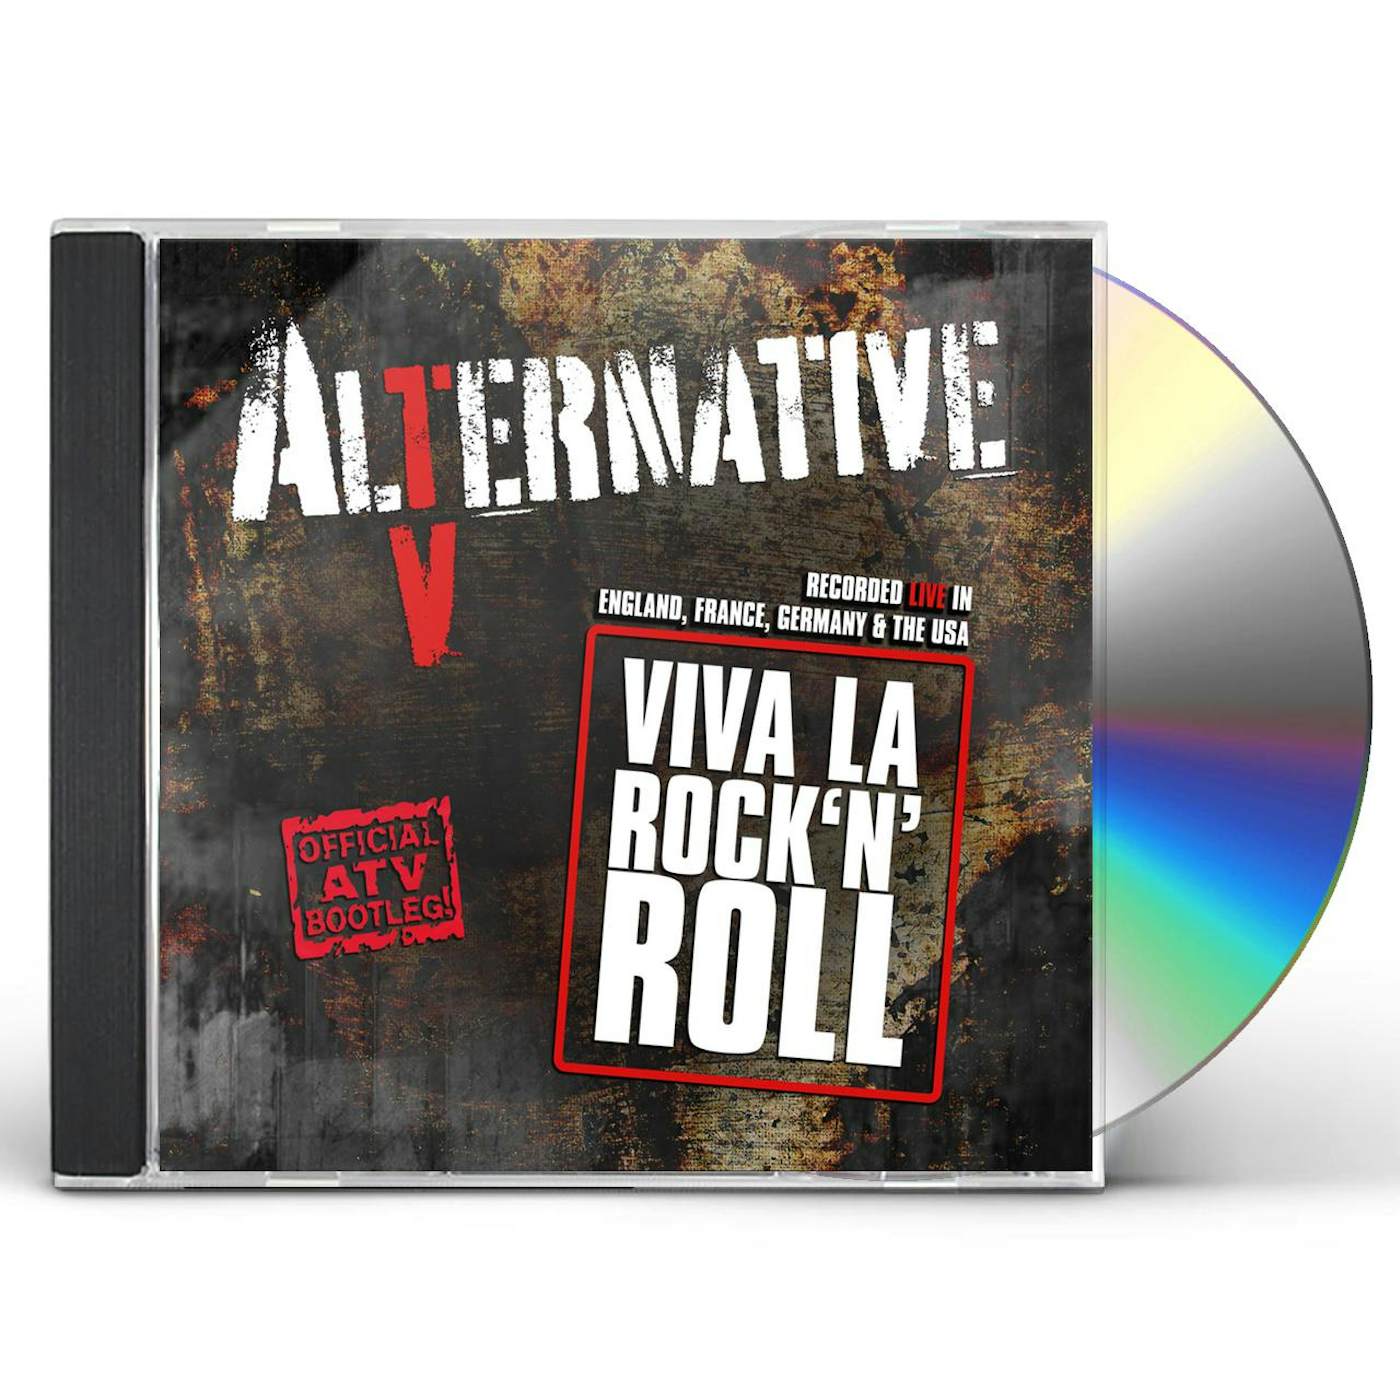 Alternative TV Viva La Rock'n'roll (Official Atv Bootle CD